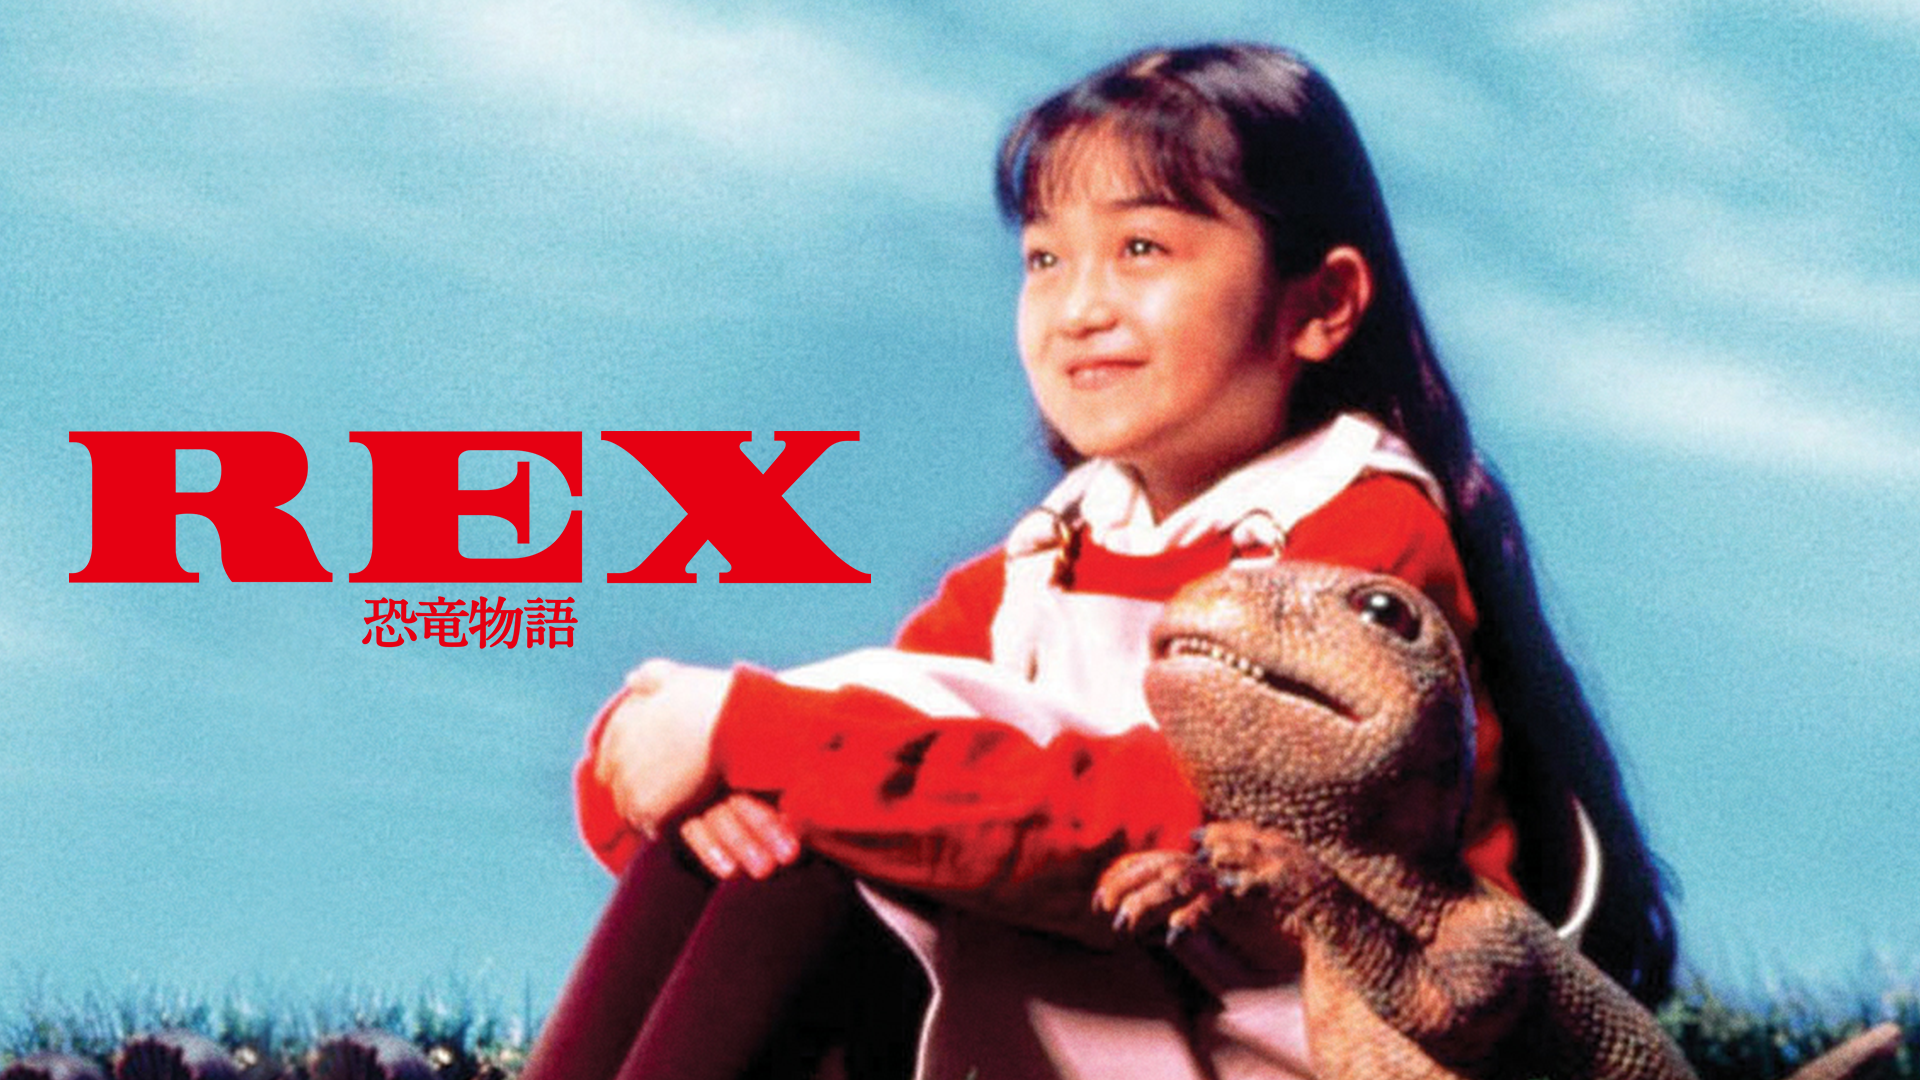 ＲＥＸ 恐竜物語(邦画 / 1993) - 動画配信 | U-NEXT 31日間無料トライアル